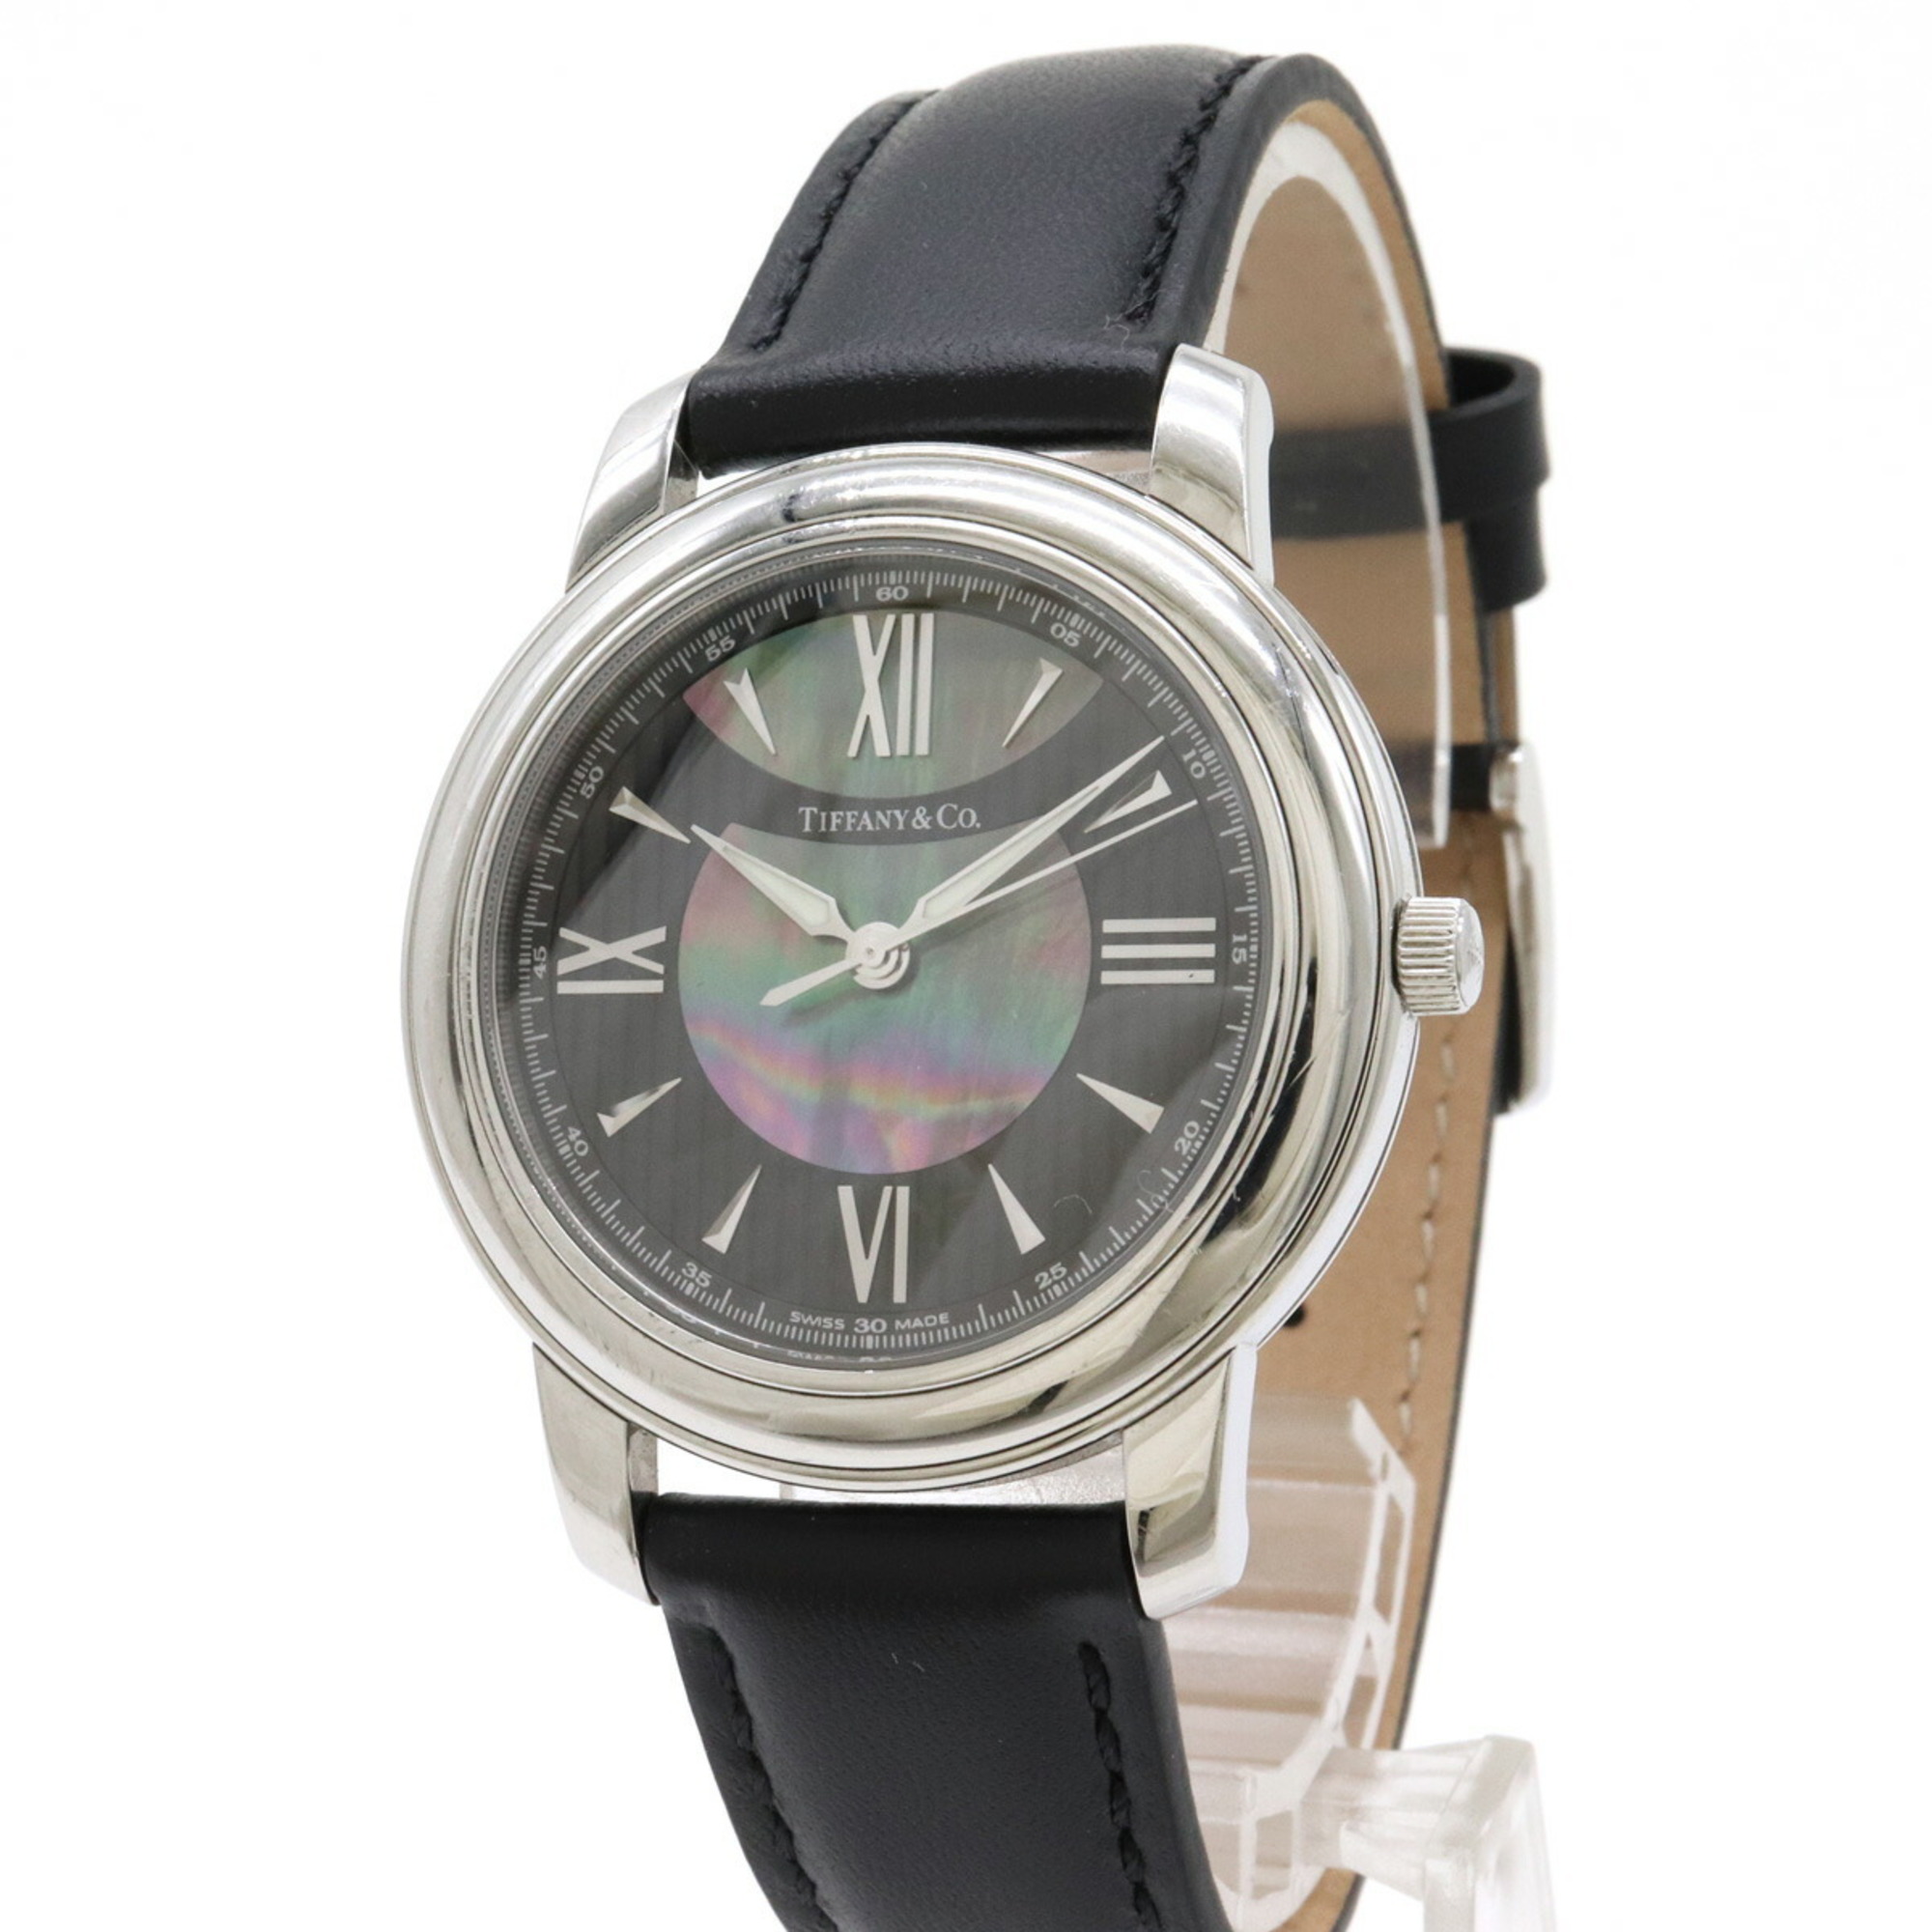 TIFFANY&Co. Tiffany Mark Round Black Shell Dial SS Leather Strap Men's Quartz Watch Z0046.17.10A900A